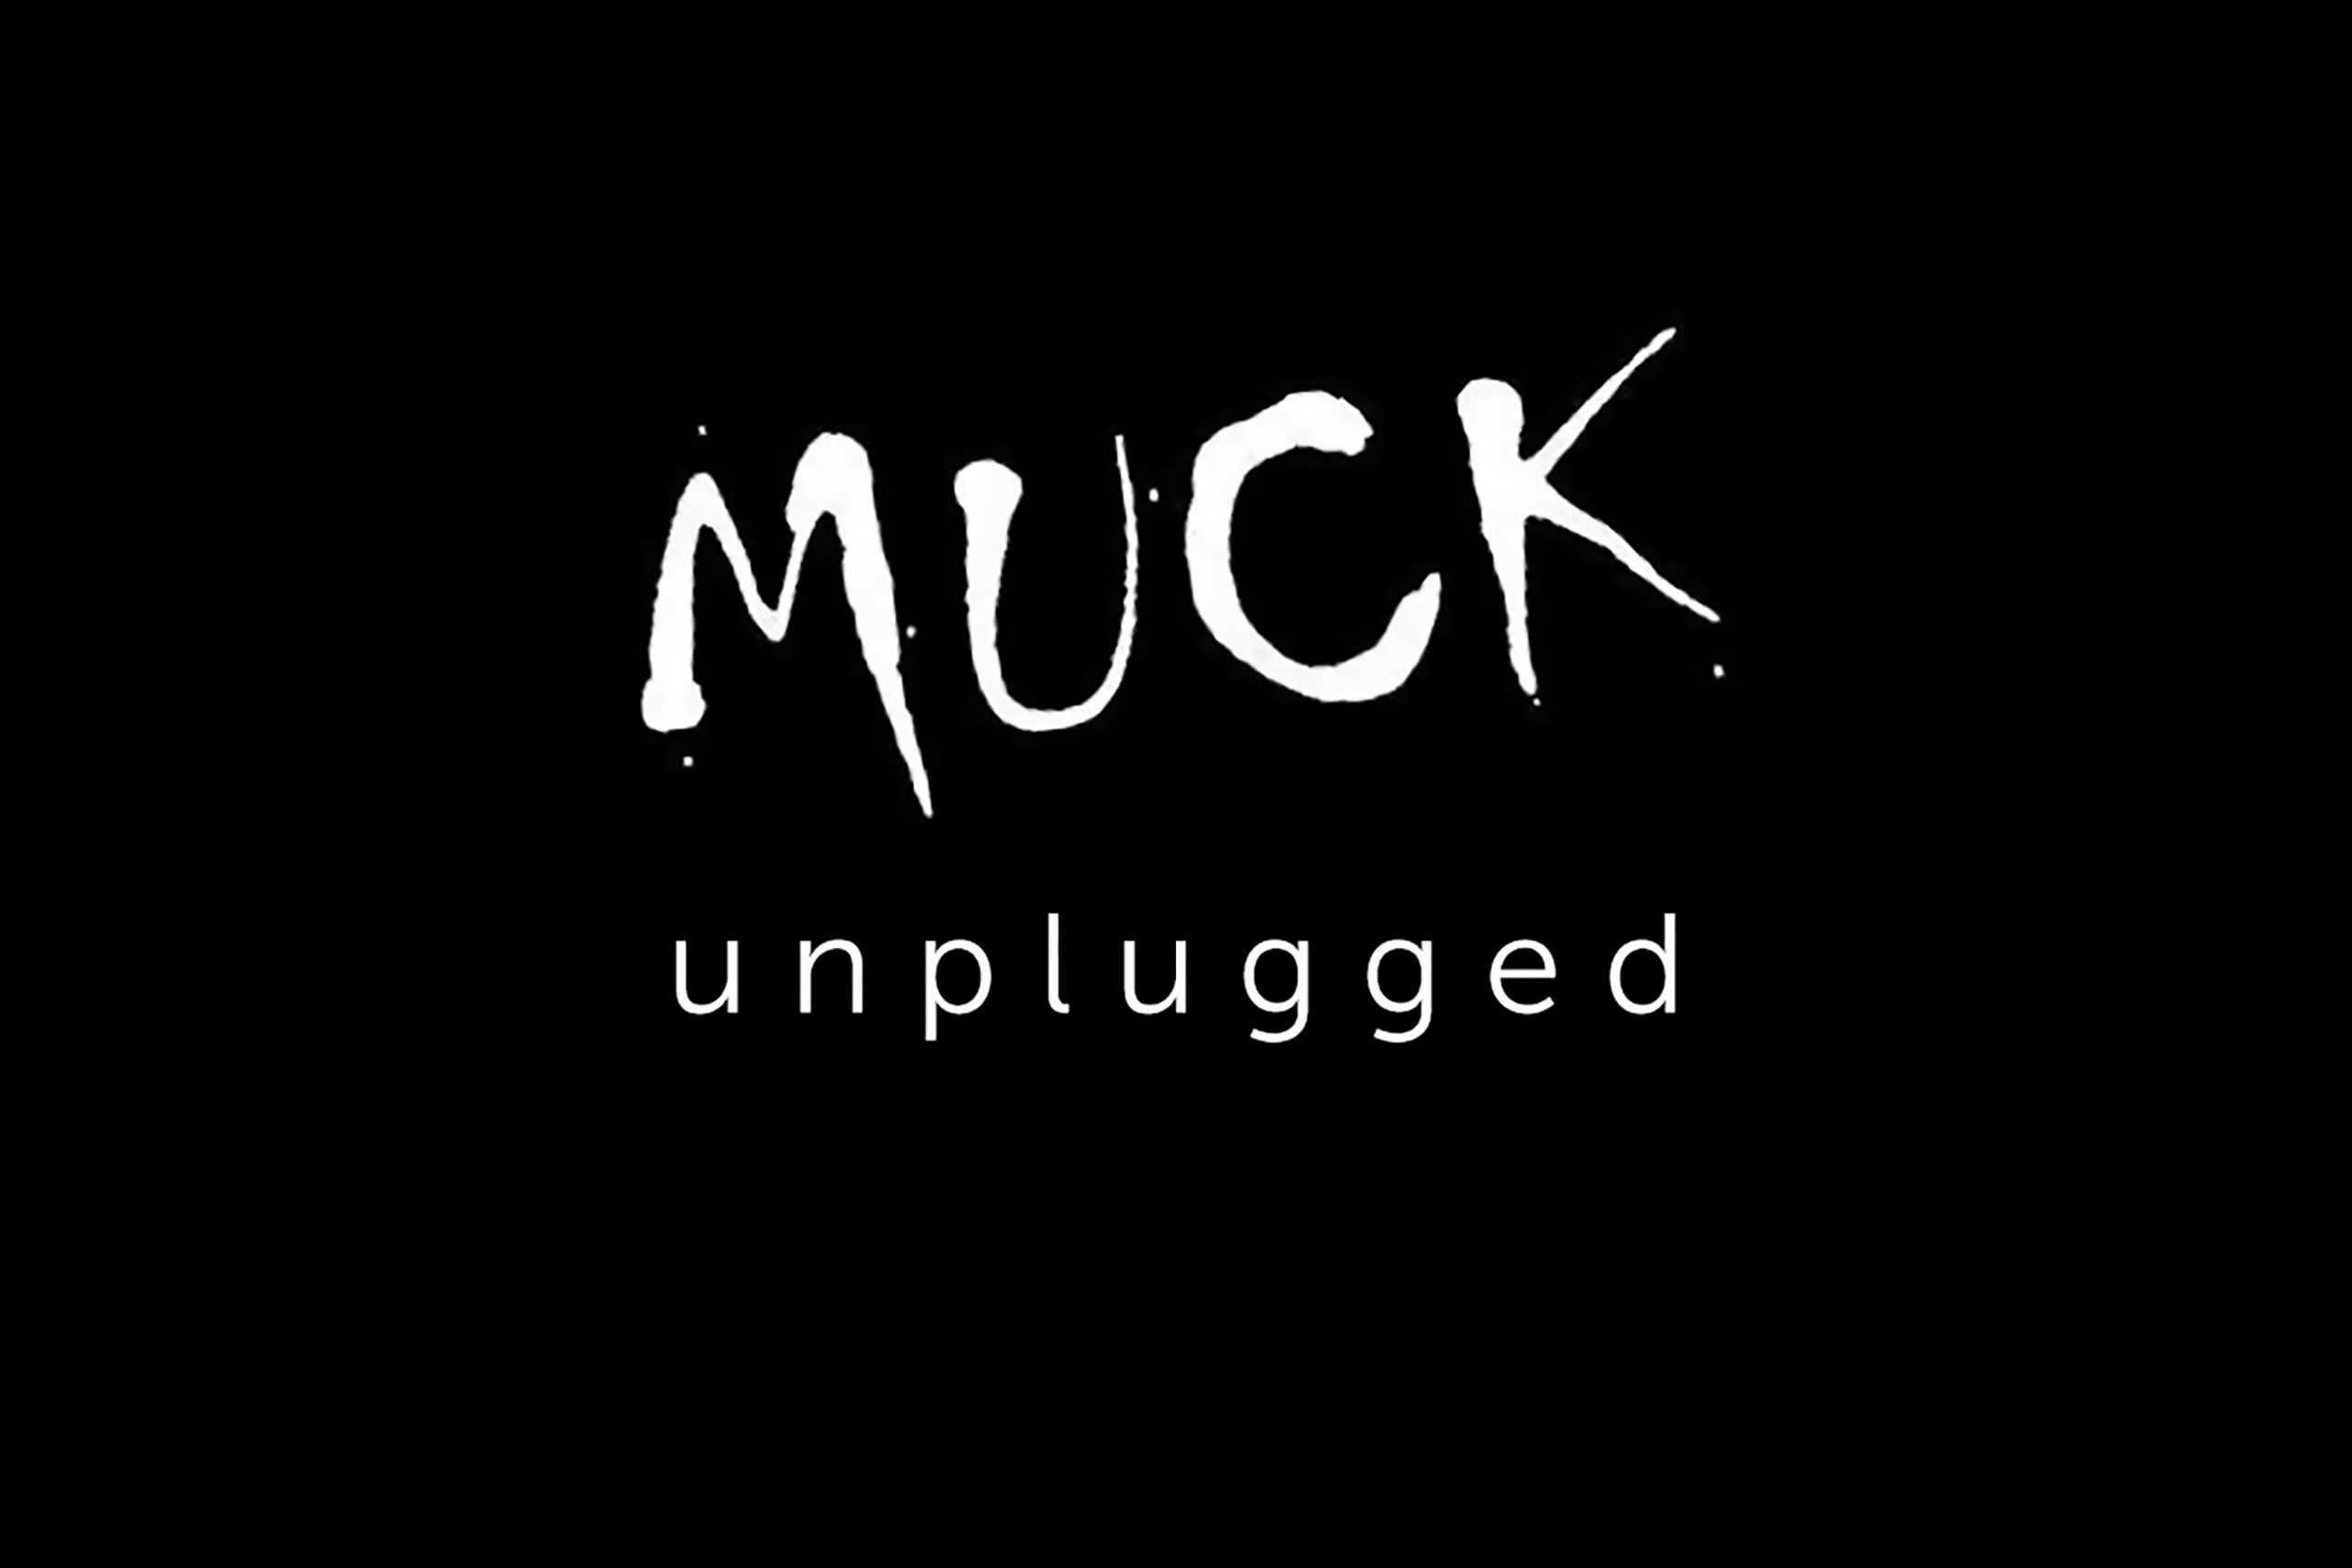 MUCK unplugged